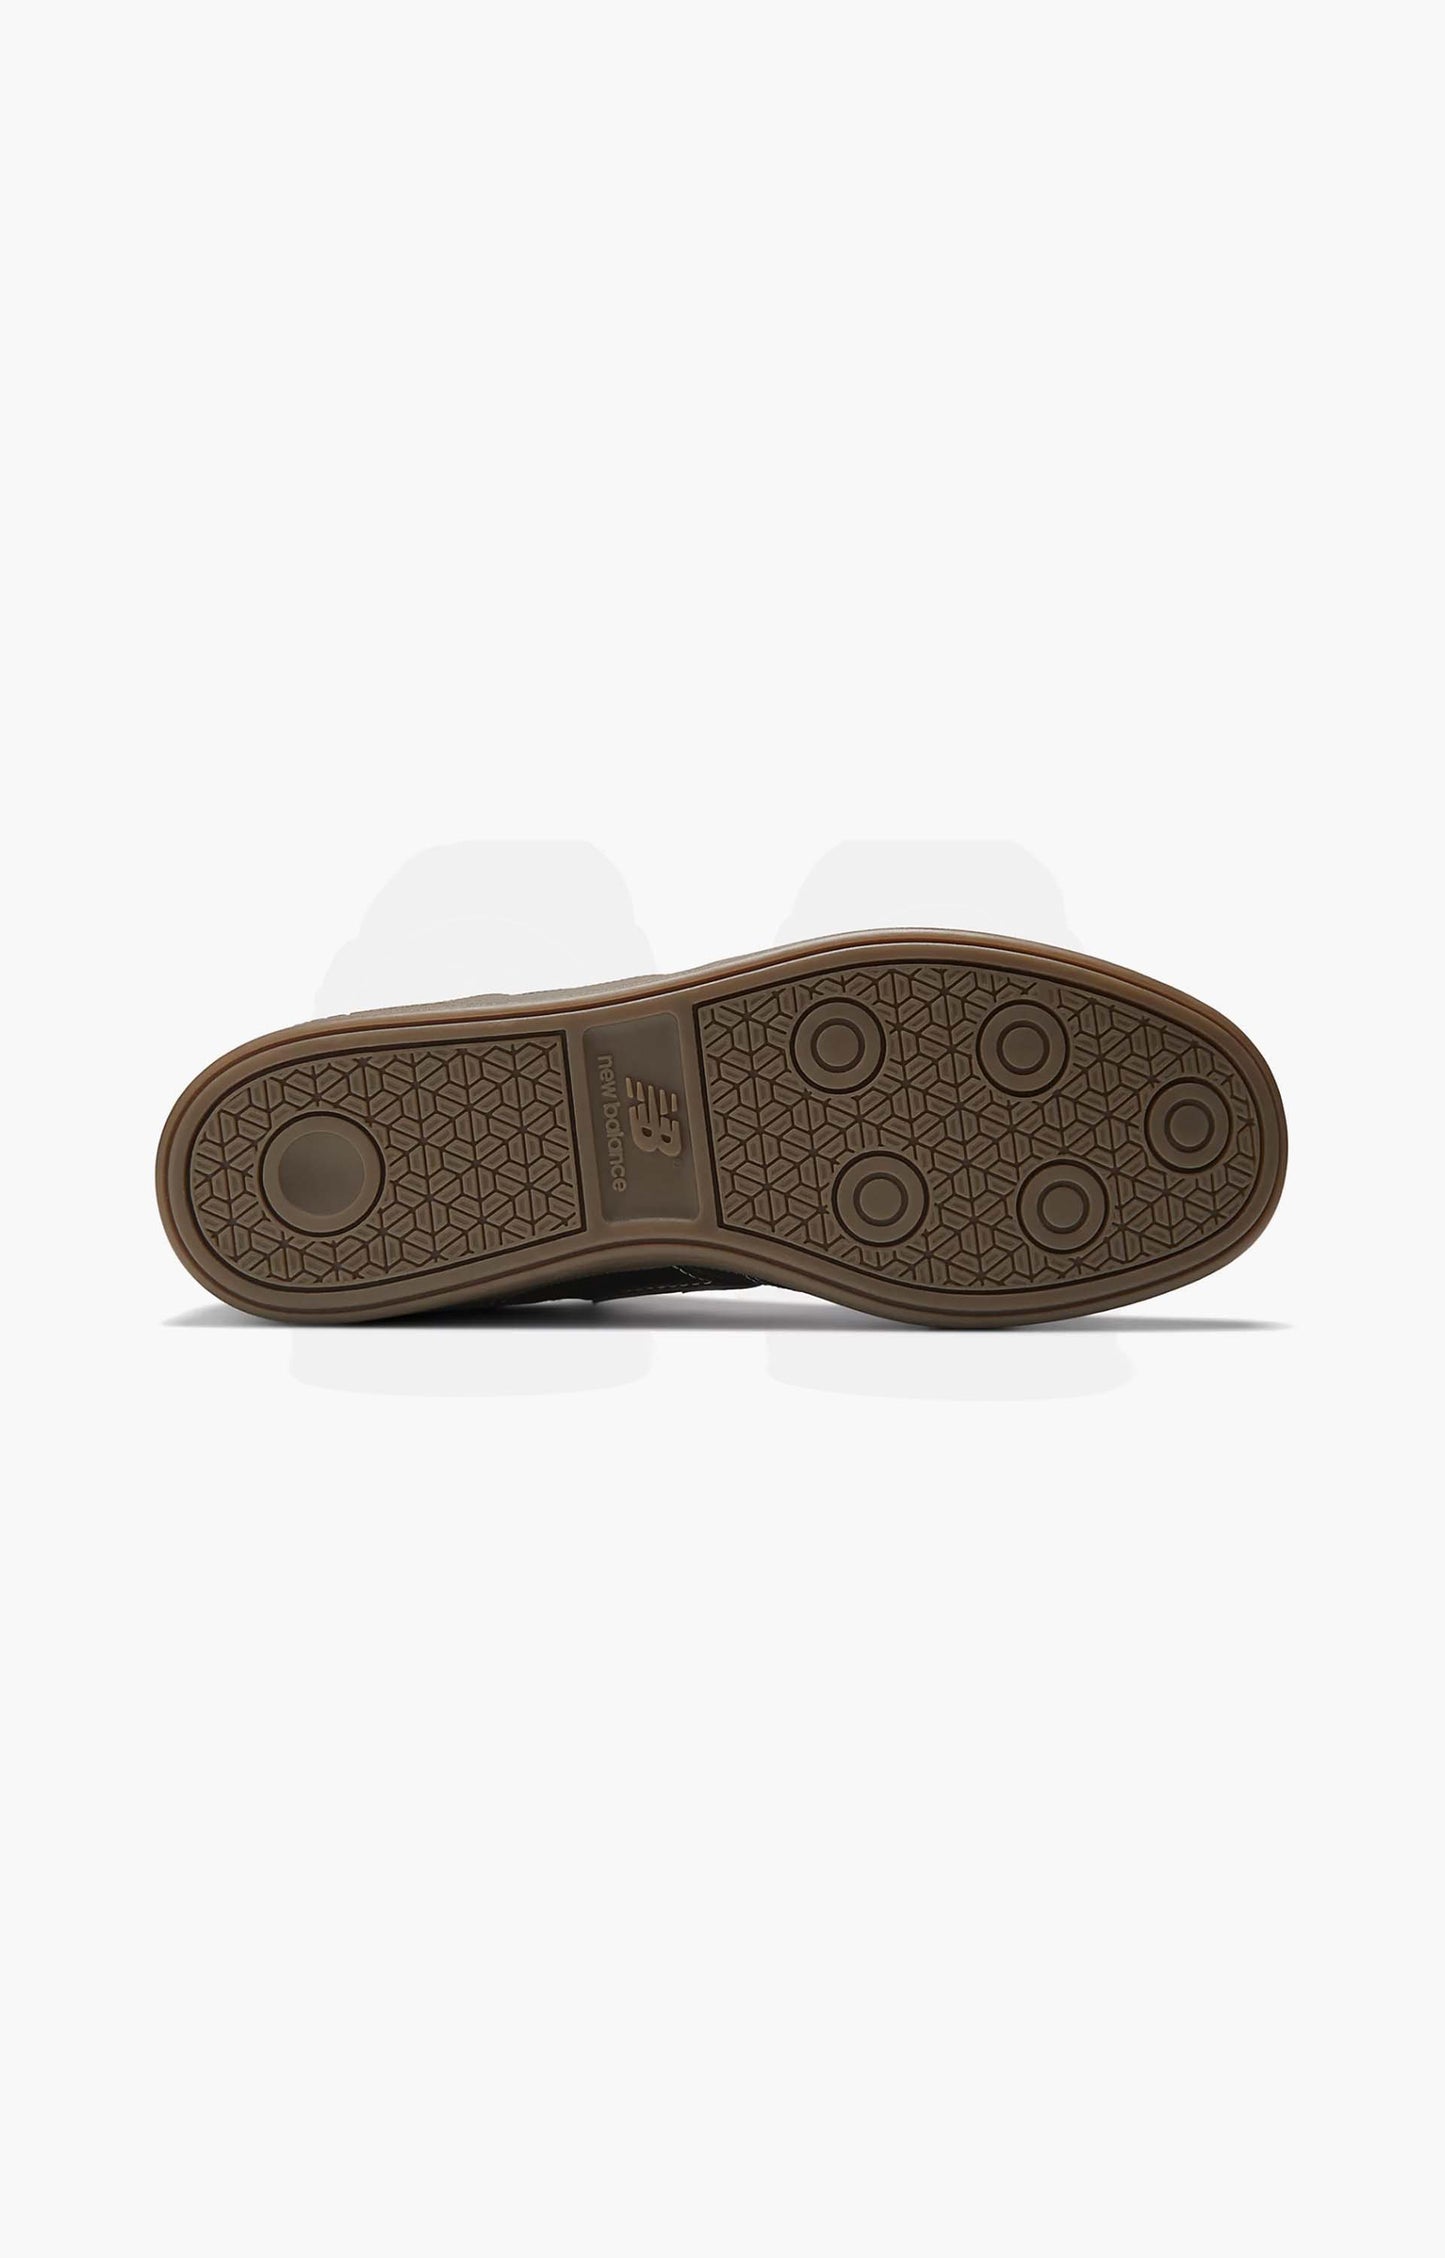 New Balance Numeric Brandon Westgate NM508ASR Shoe, Black/Gum